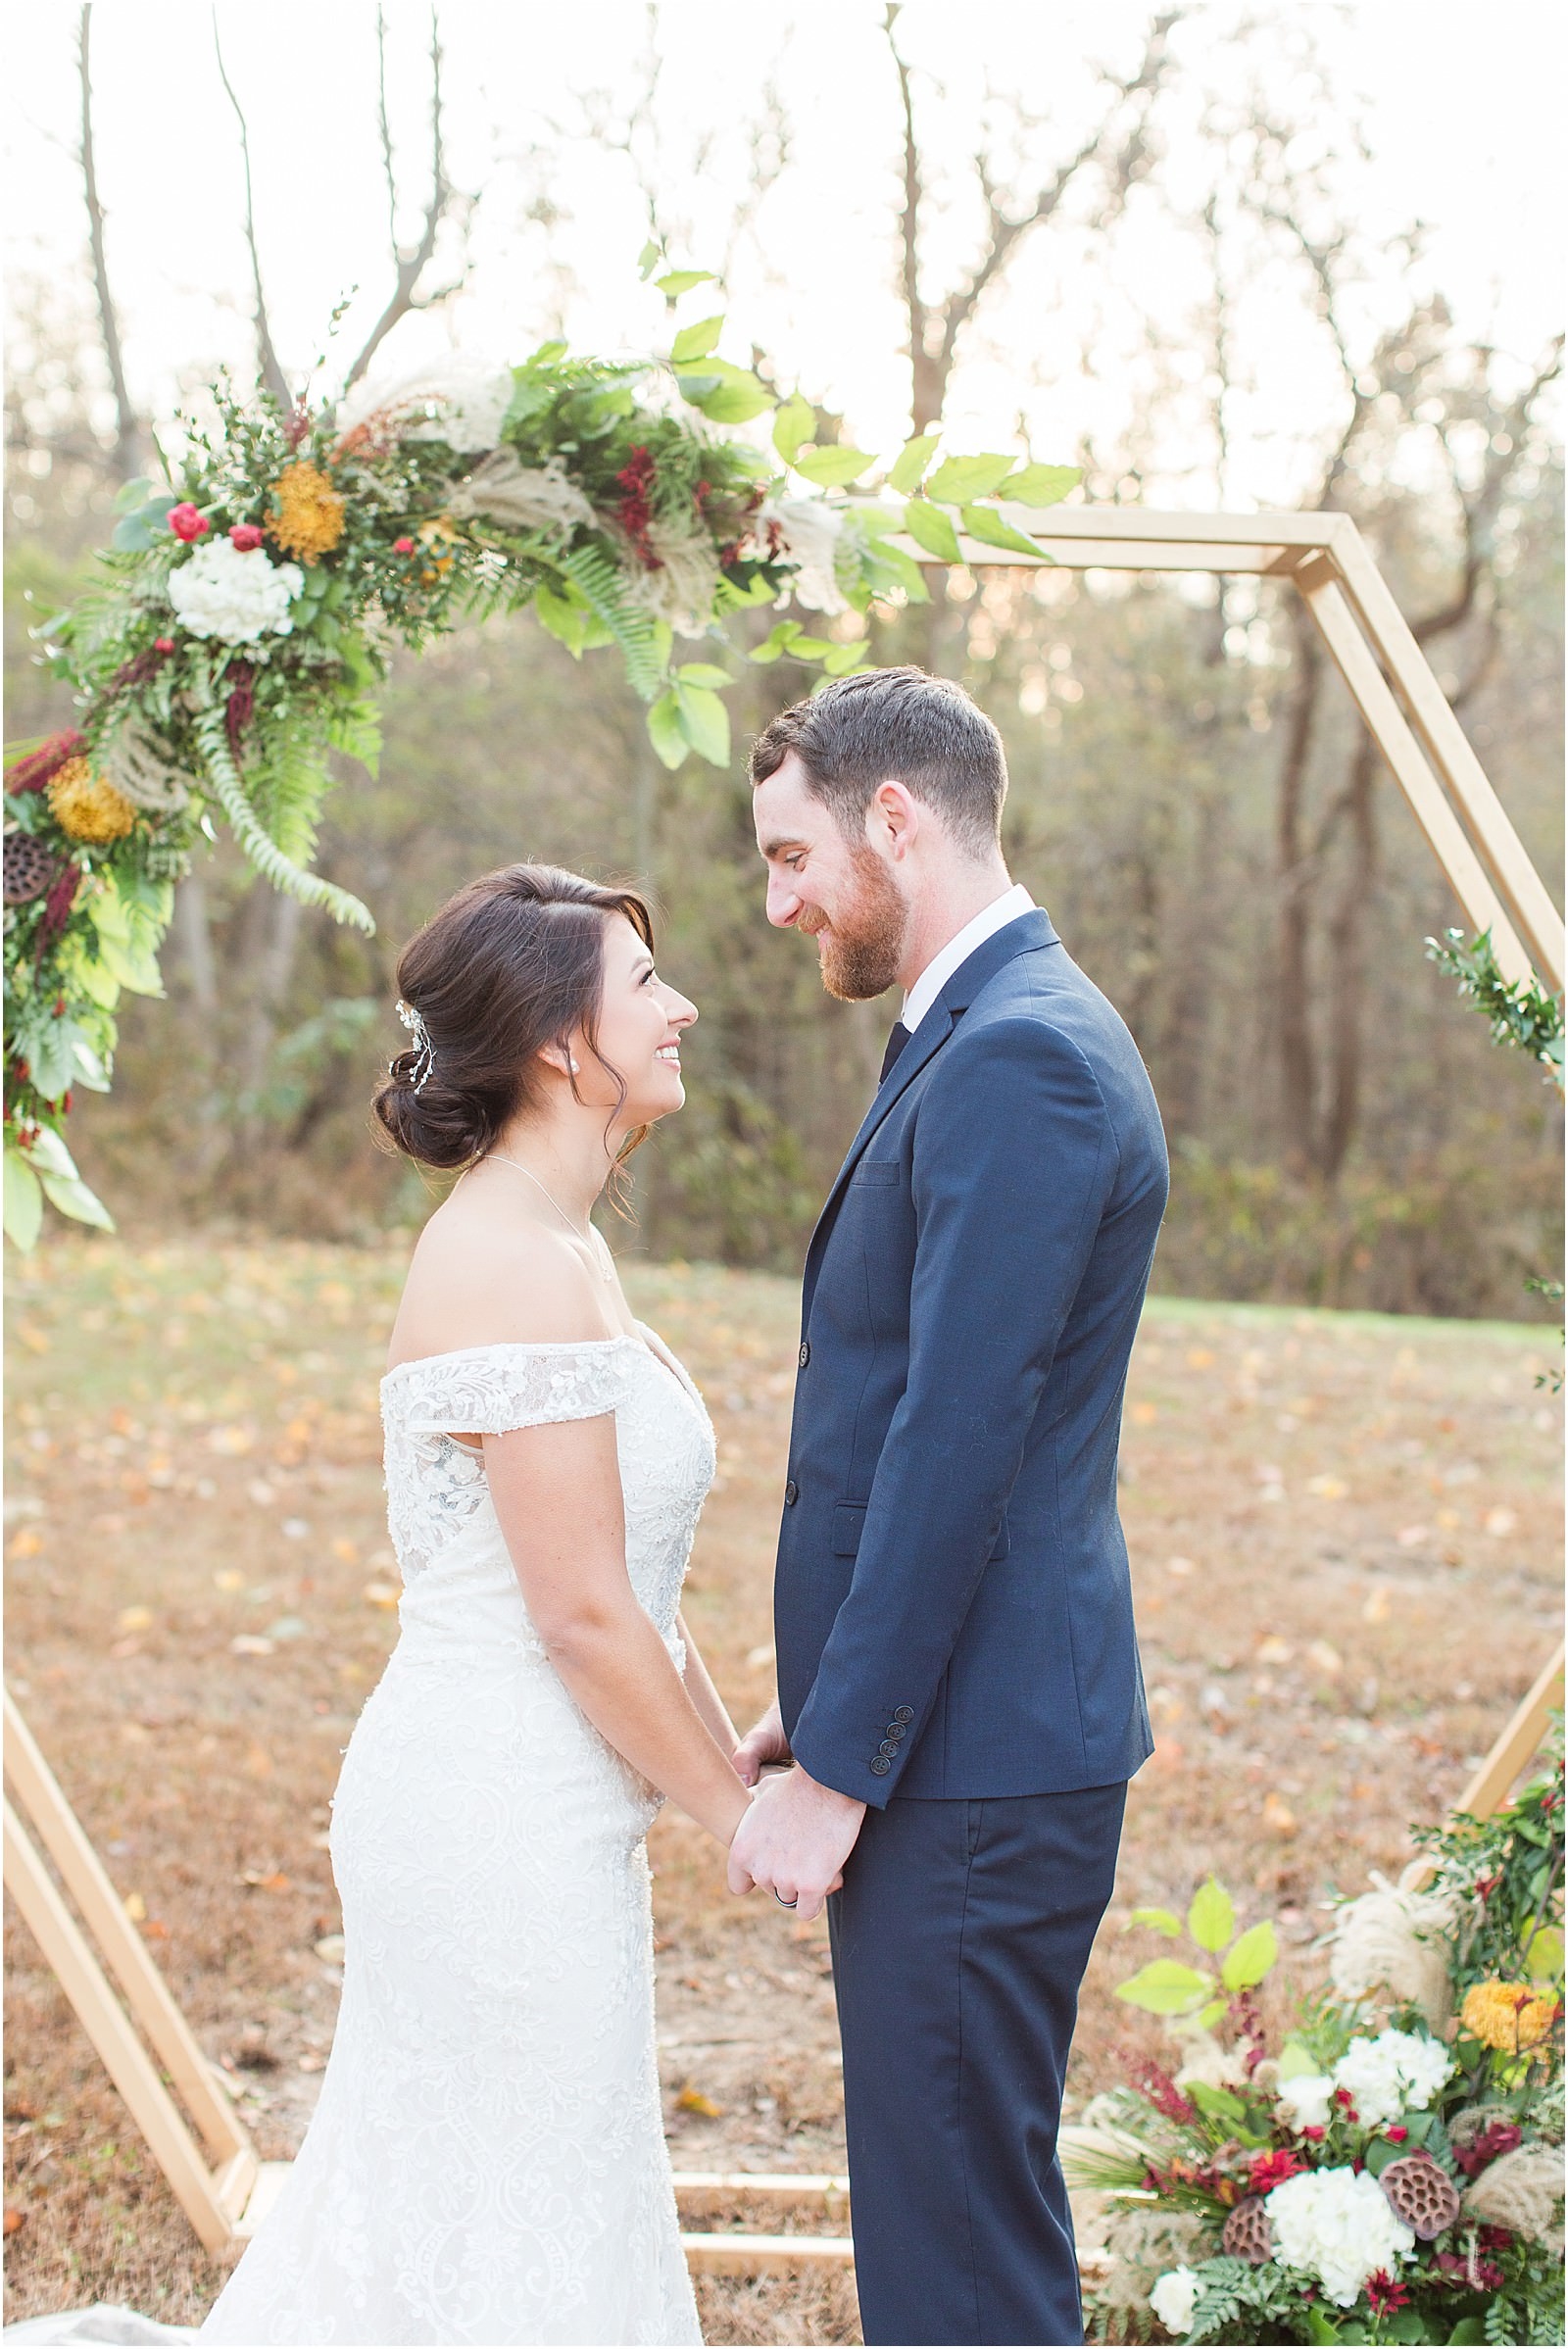 Walker and Alyssa's intimate fall wedding in Southern Indiana. | Wedding Photography | The Corner House Wedding | Southern Indiana Wedding | #fallwedding #intimatewedding | 070.jpg